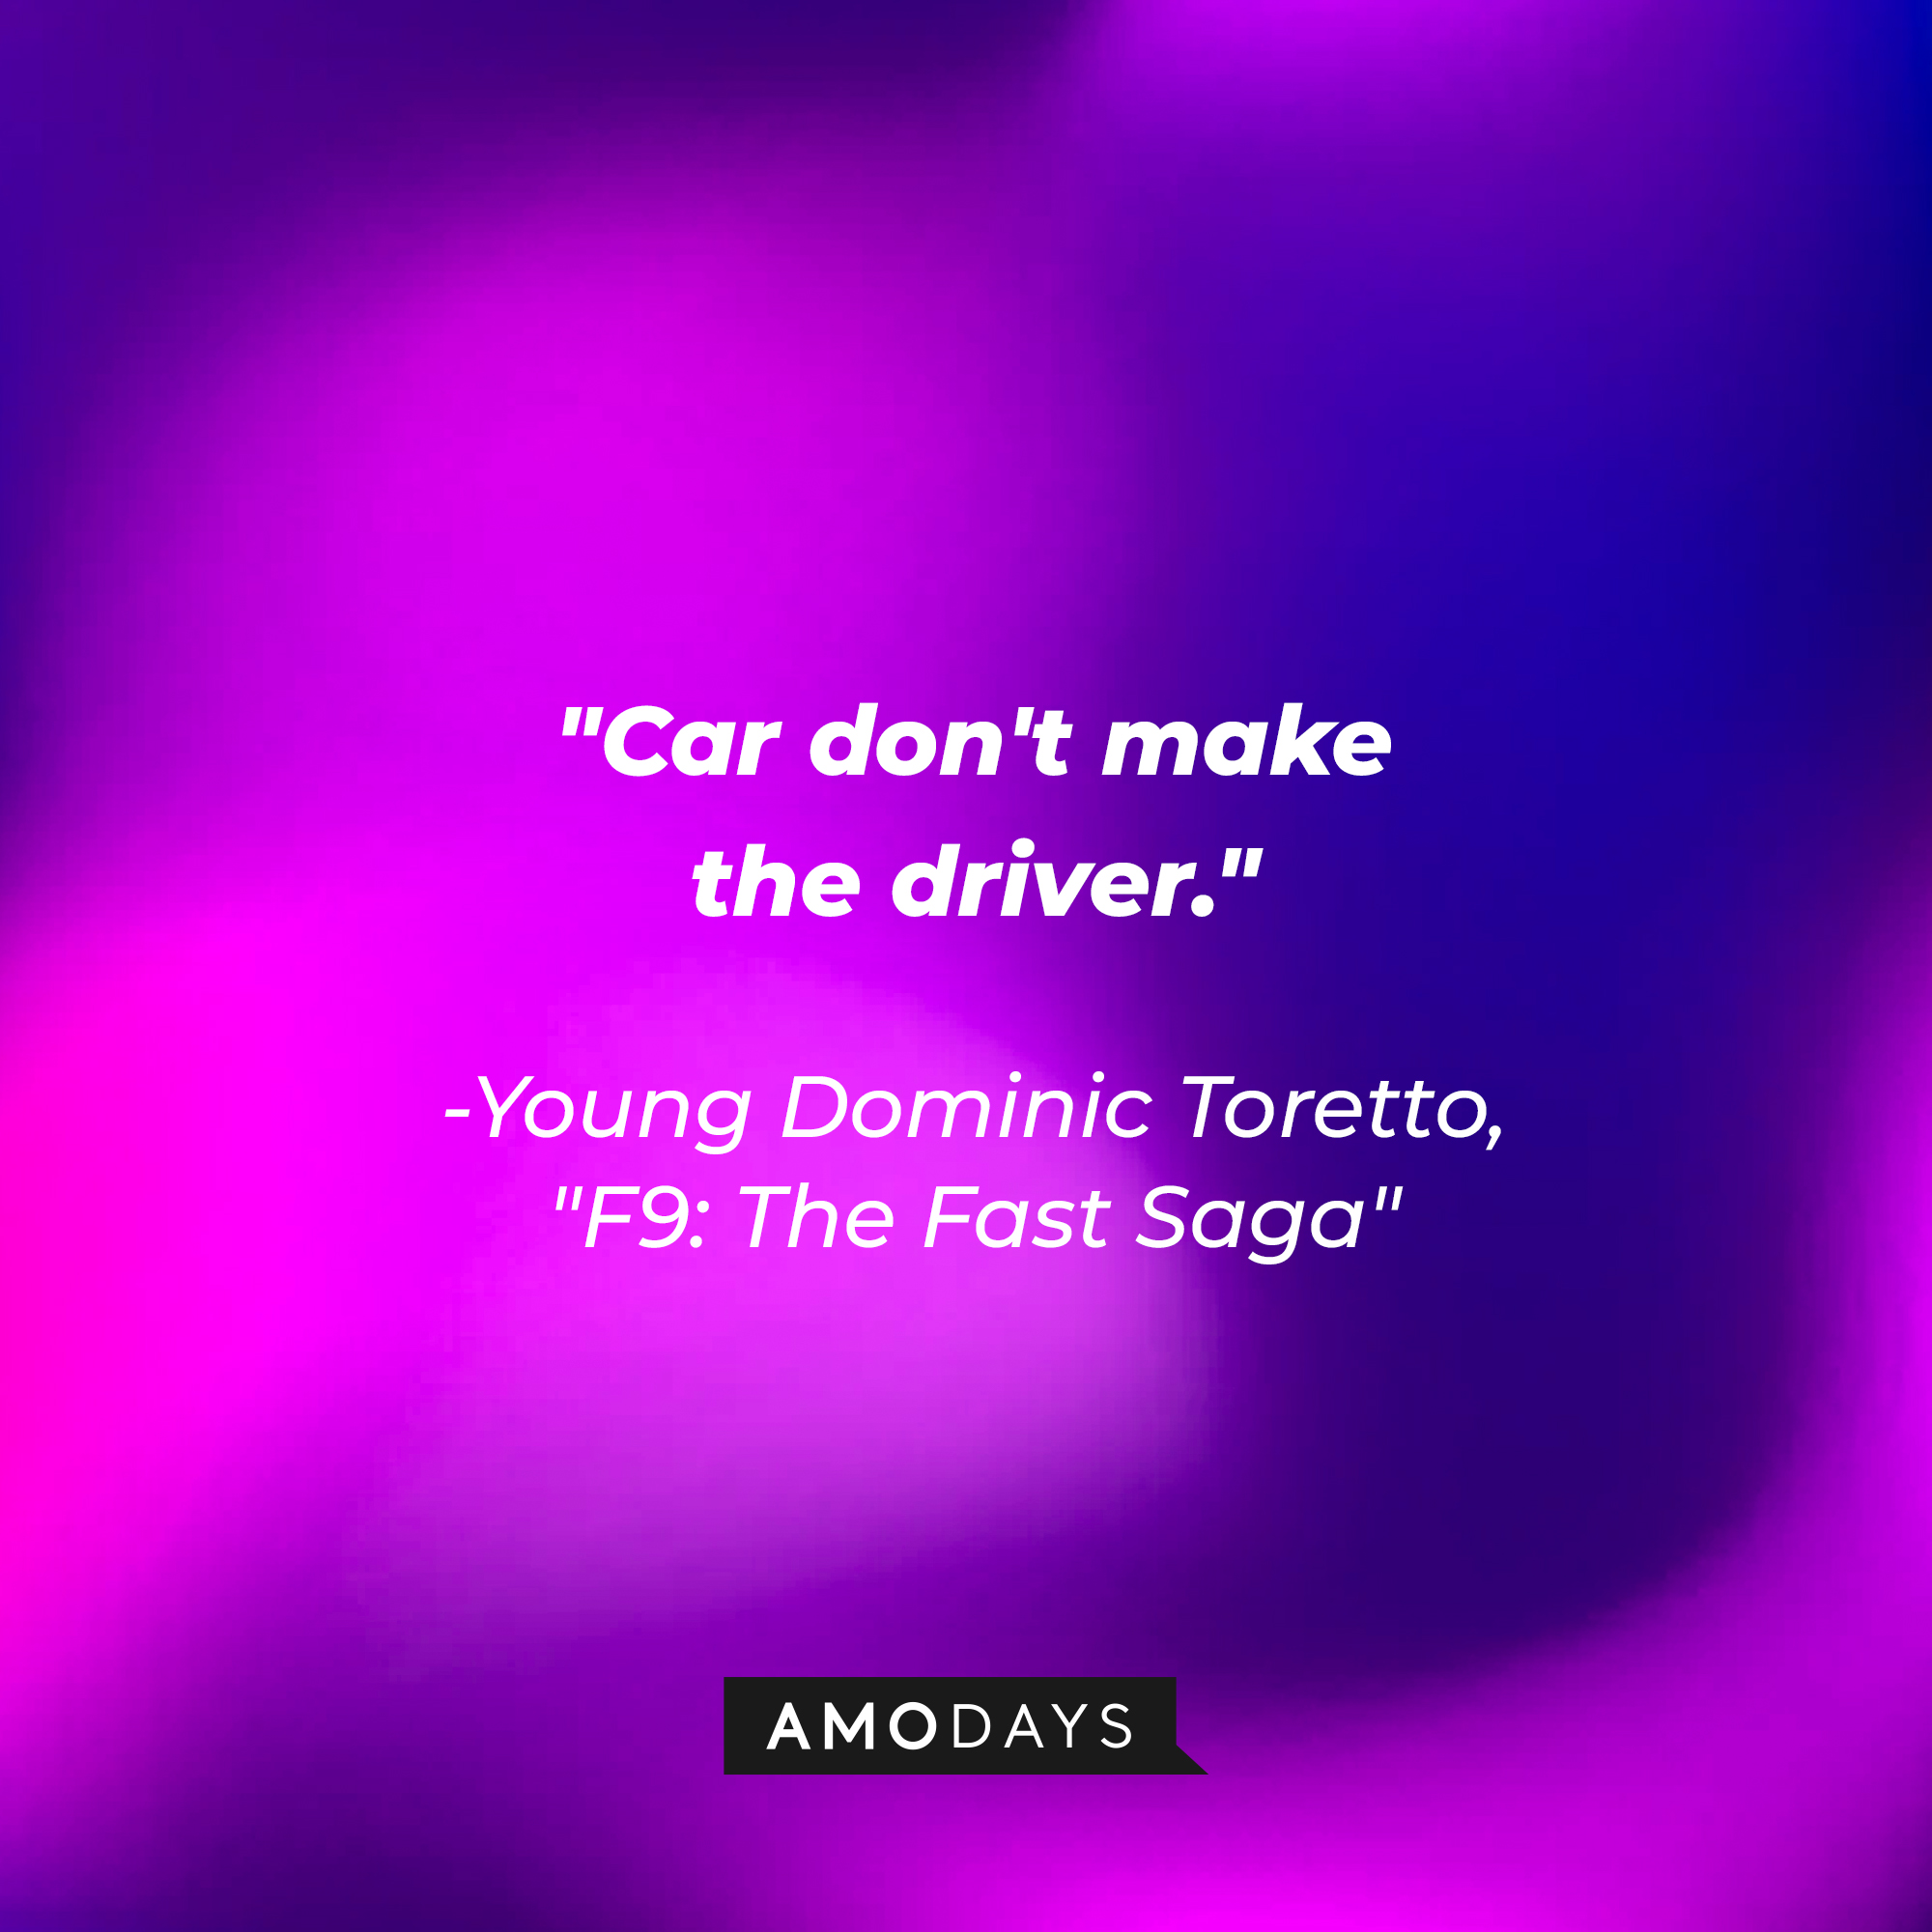 Dominic Toretto’s quote: "Car don't make the driver." | Image: AmoDays